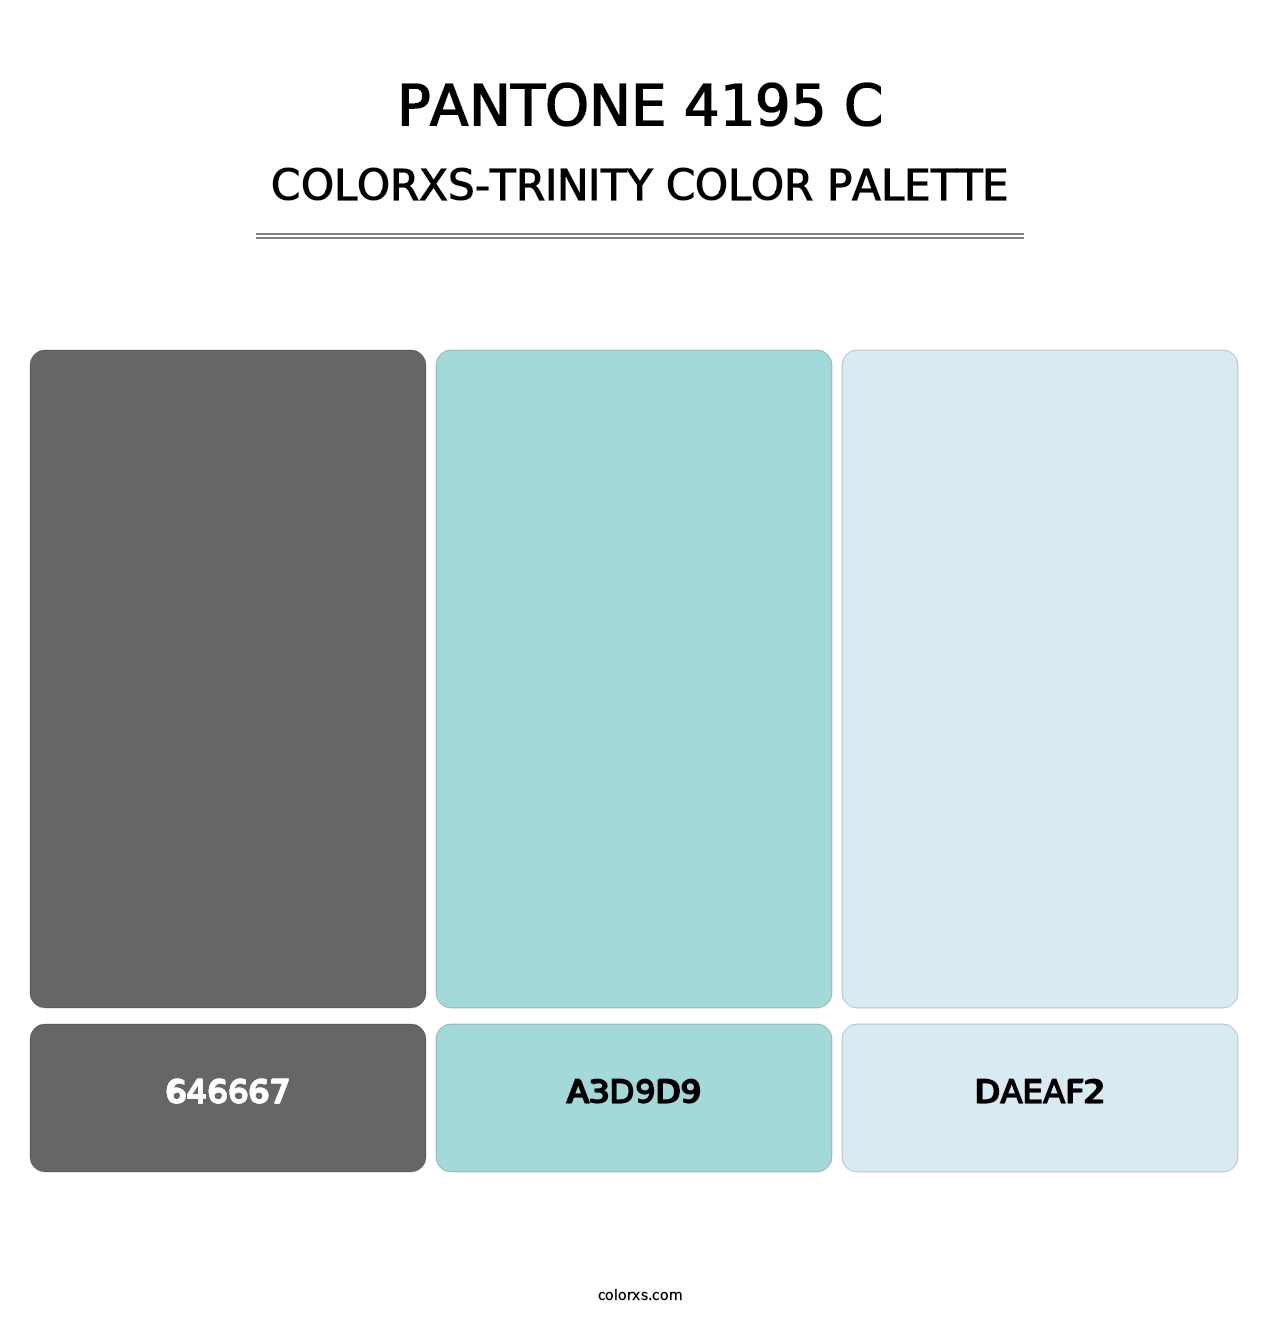 PANTONE 4195 C - Colorxs Trinity Palette